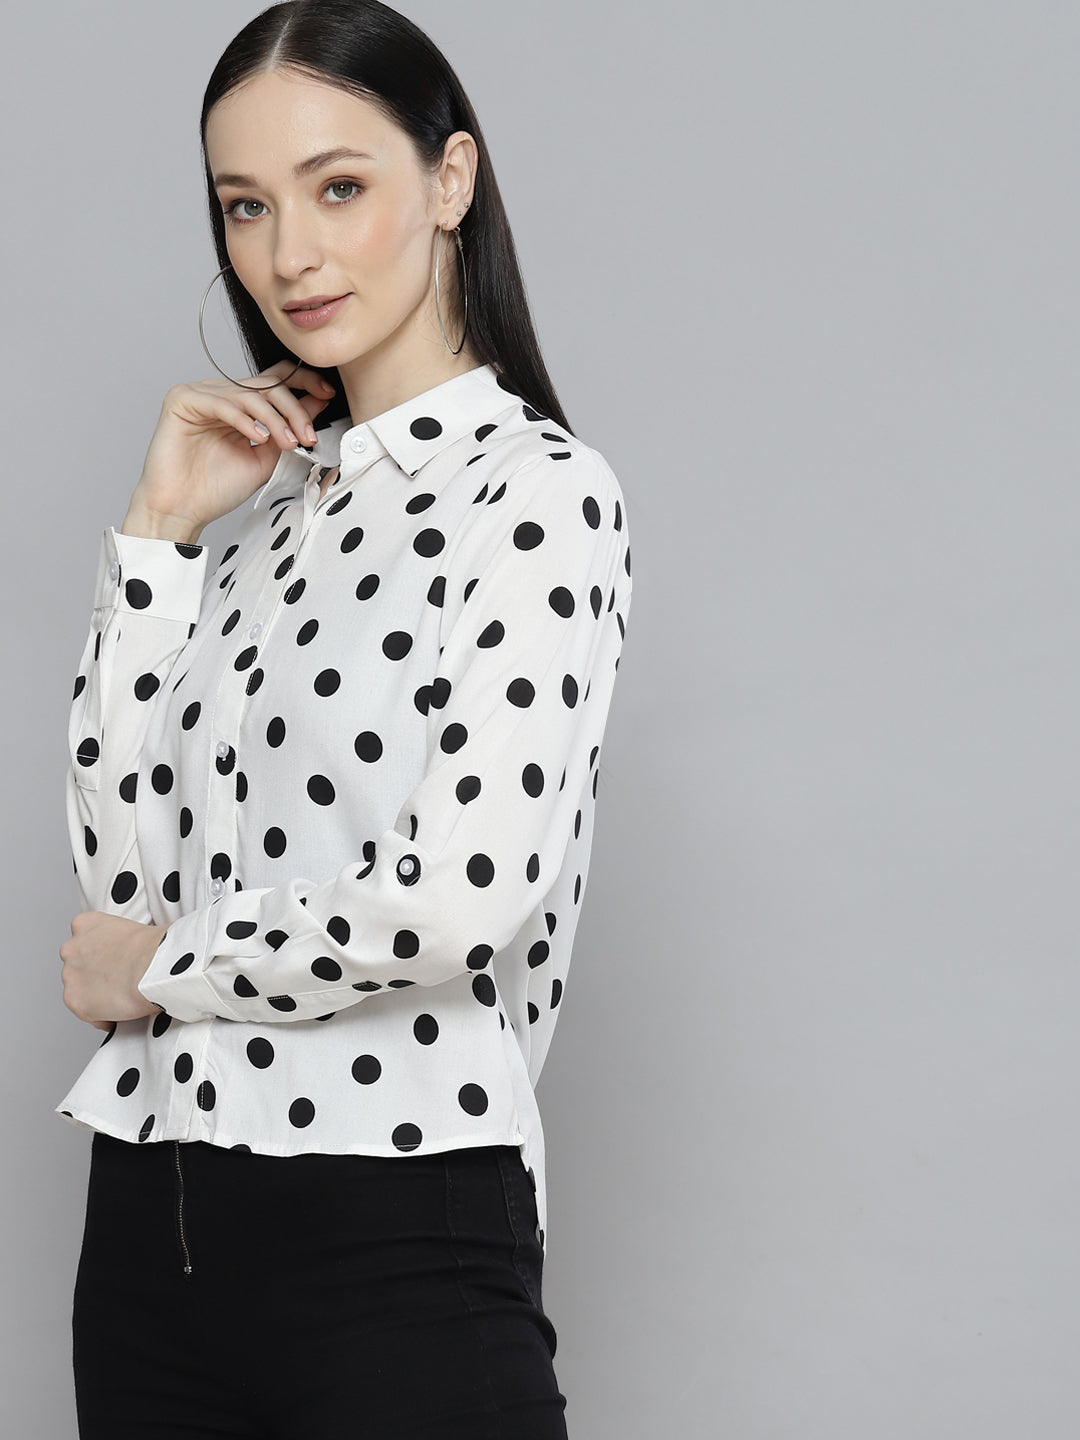 DENNISON Women White & Black Smart Polka Dot Printed Casual Shirt